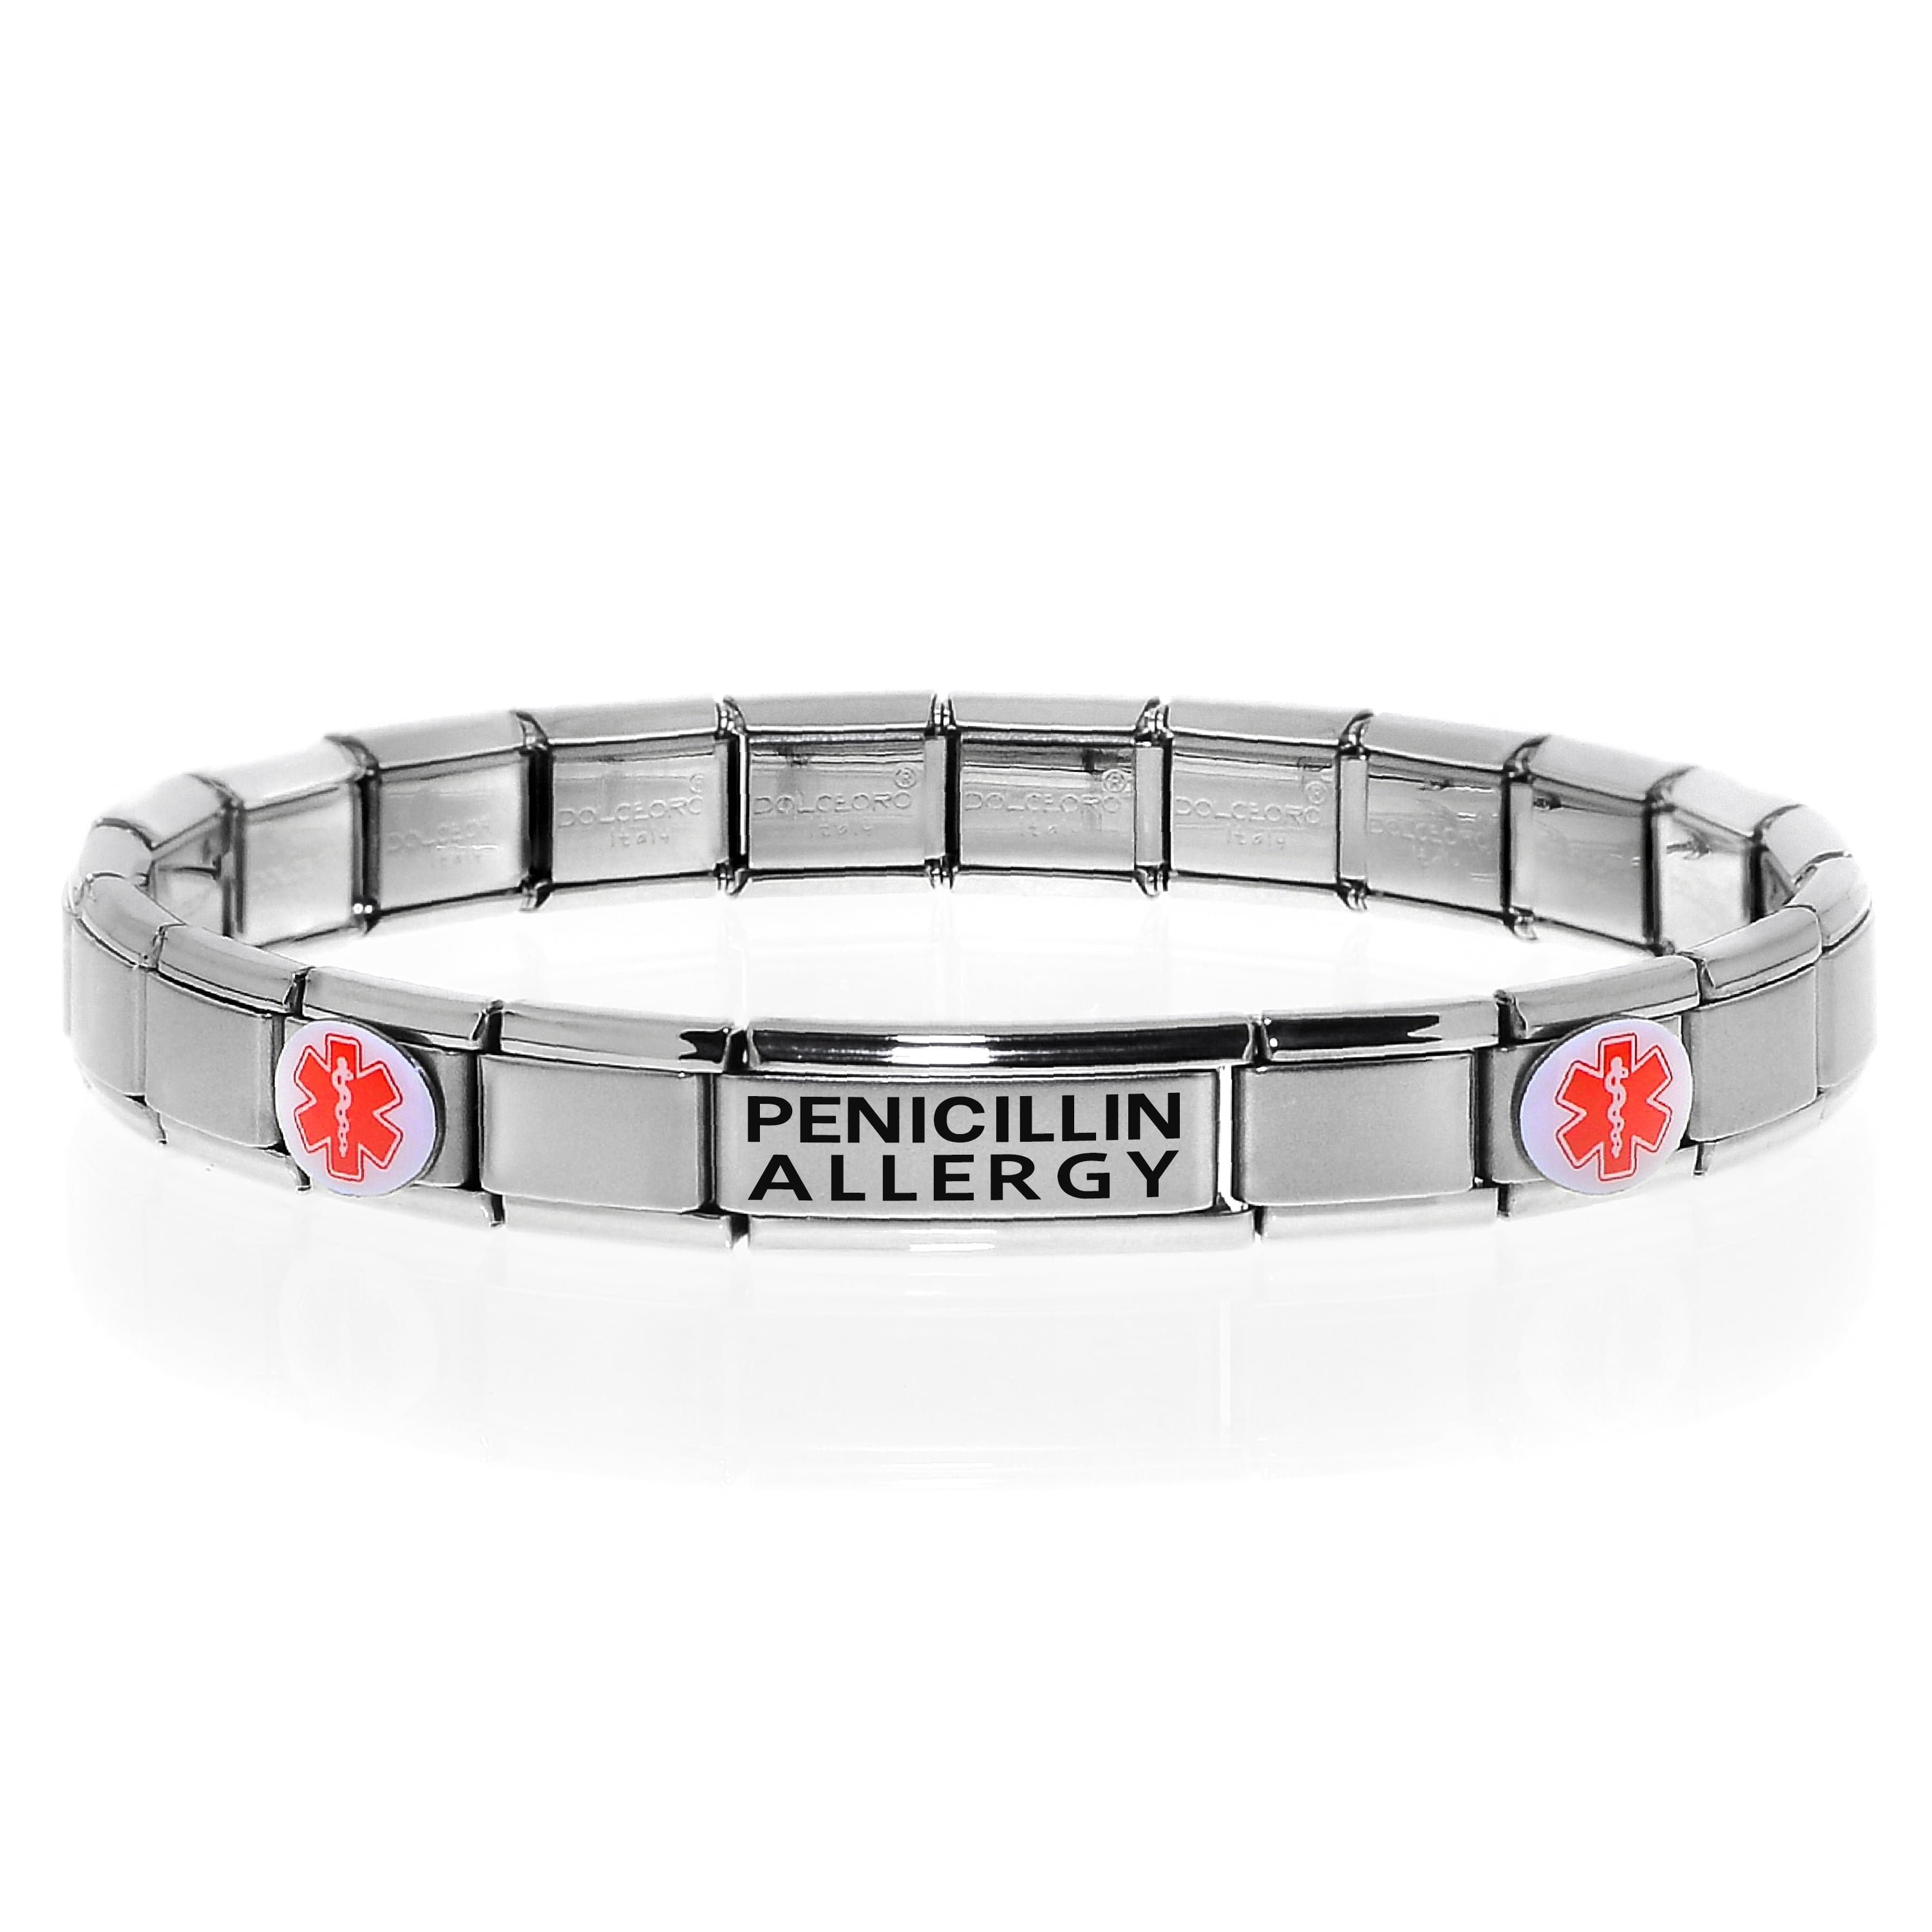 PENICILLIN ALLERGY Medical Alert ID Bracelet, Modular Charm Style - 24 Std.  Link Size - Walmart.com